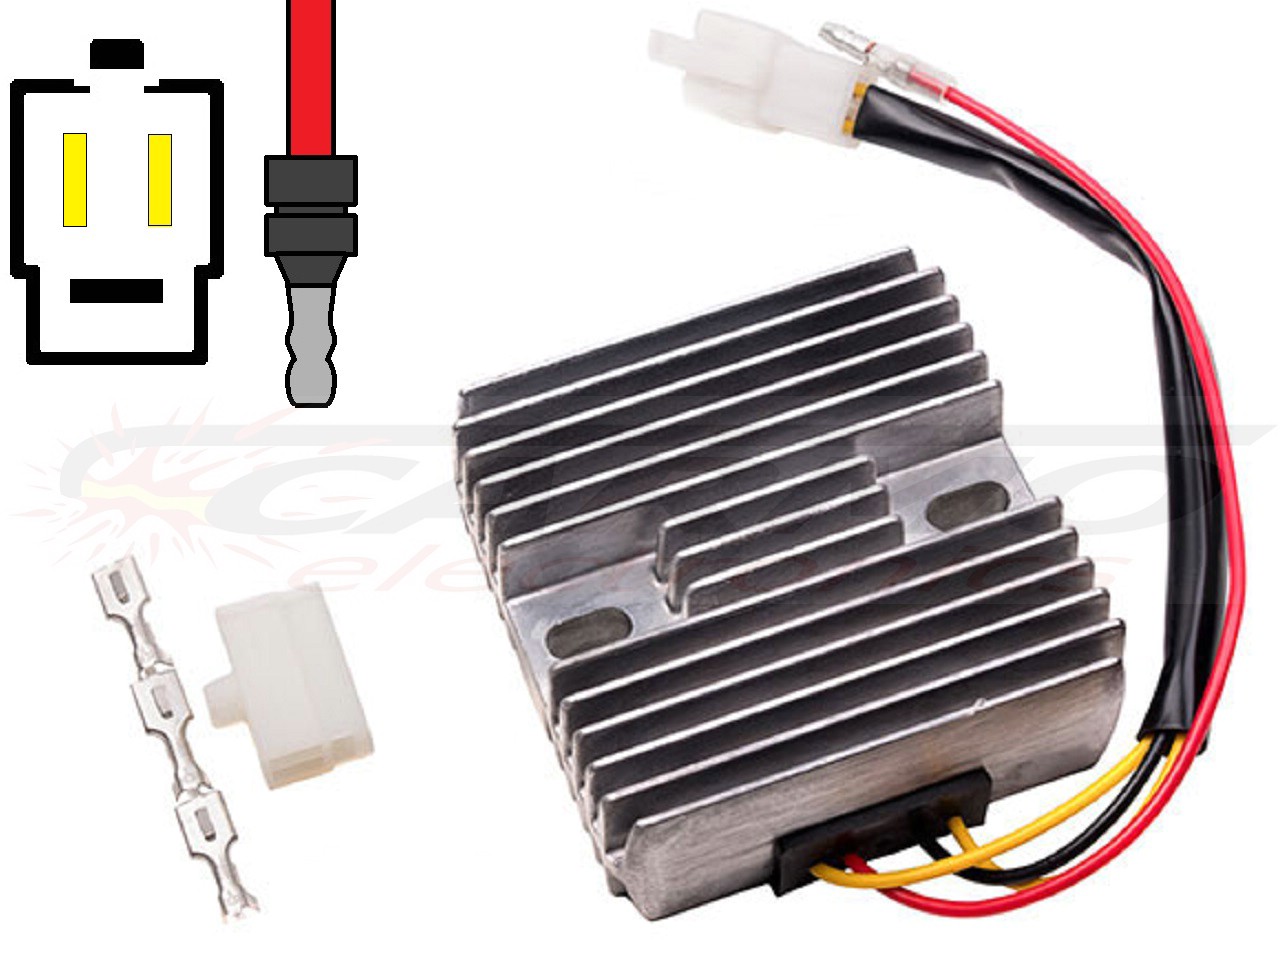 CARR601 - Kawasaki 2-fase MOSFET Voltage regulator rectifier - Clique na Imagem para Fechar